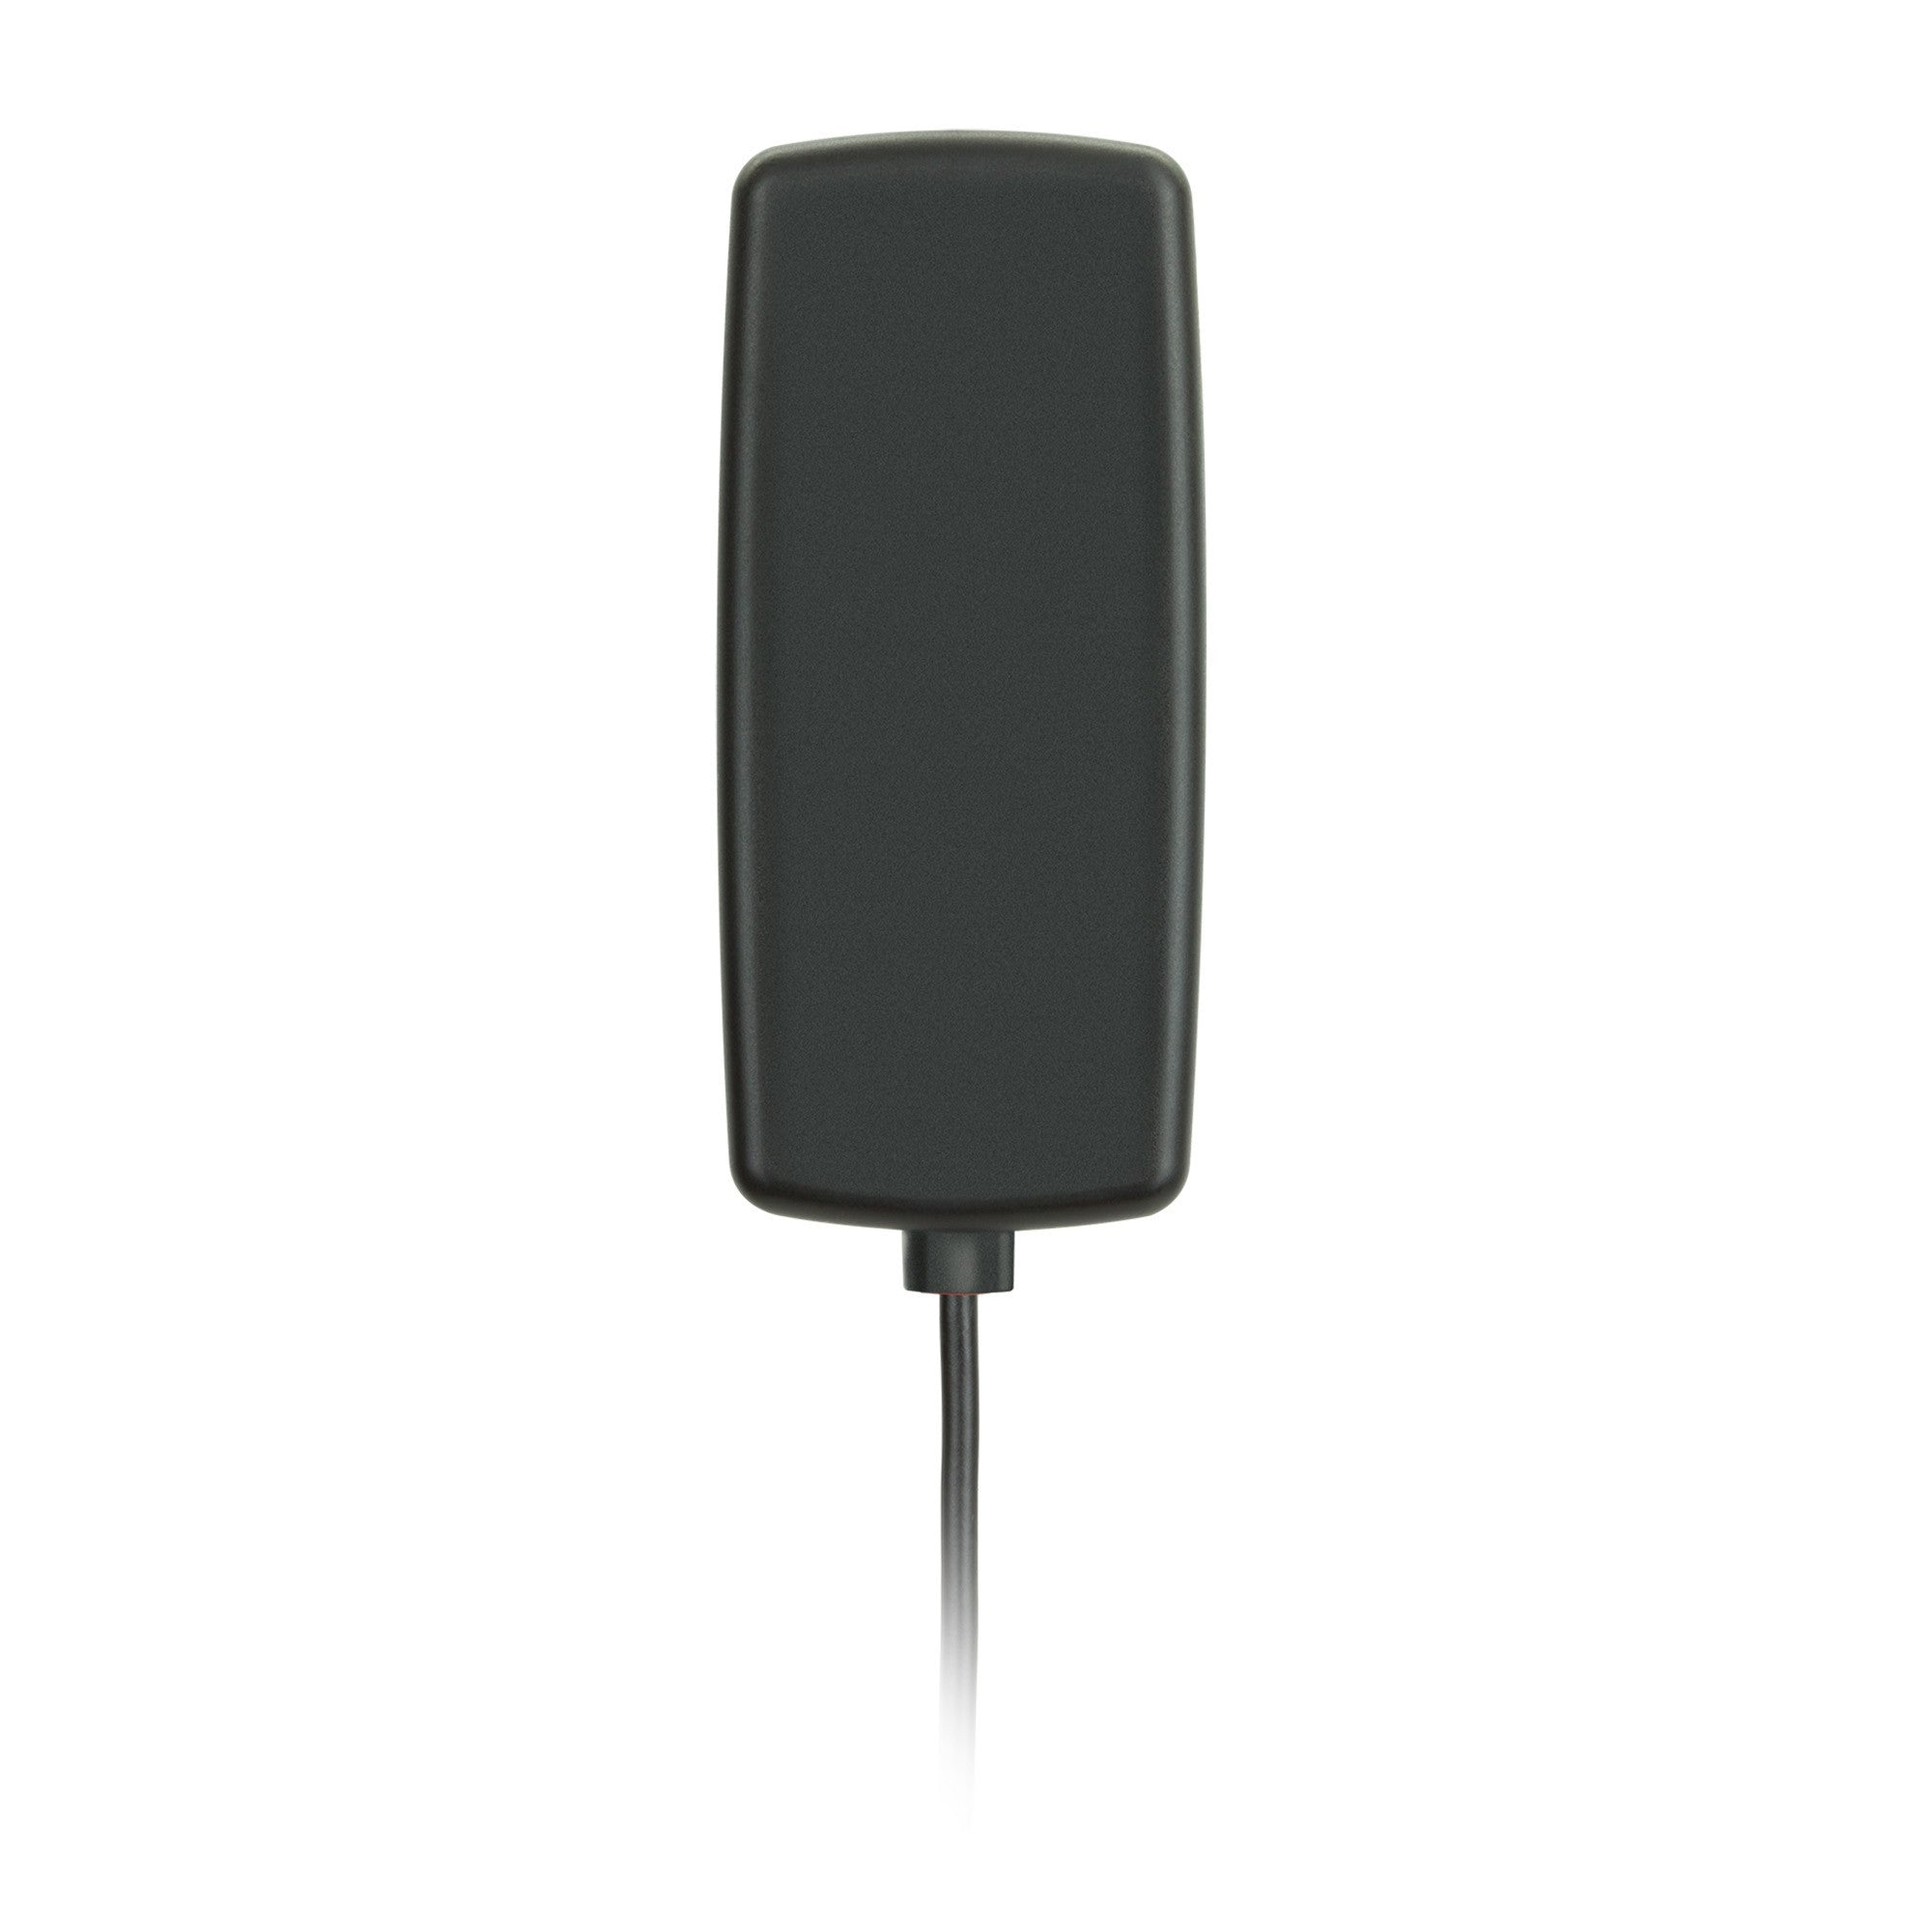 WeBoost 4G Slim Low-Profile Antenna - 15-02942